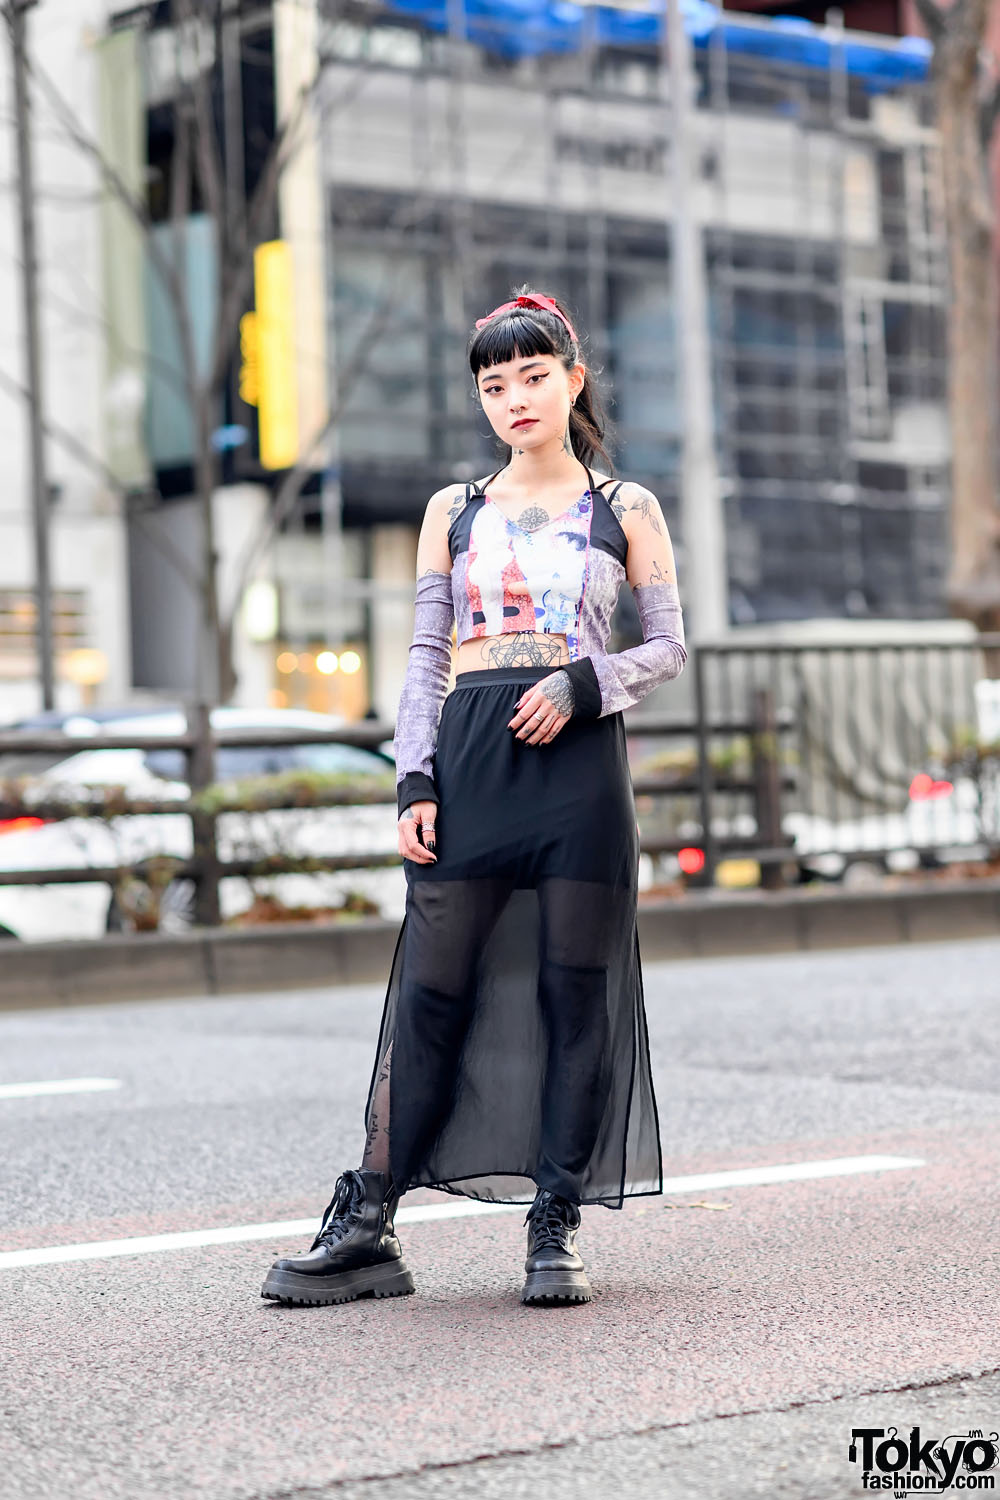 Japanese Idol w/ Tattoos & Piercings Wearing Sheer Fashion & Boots in ...